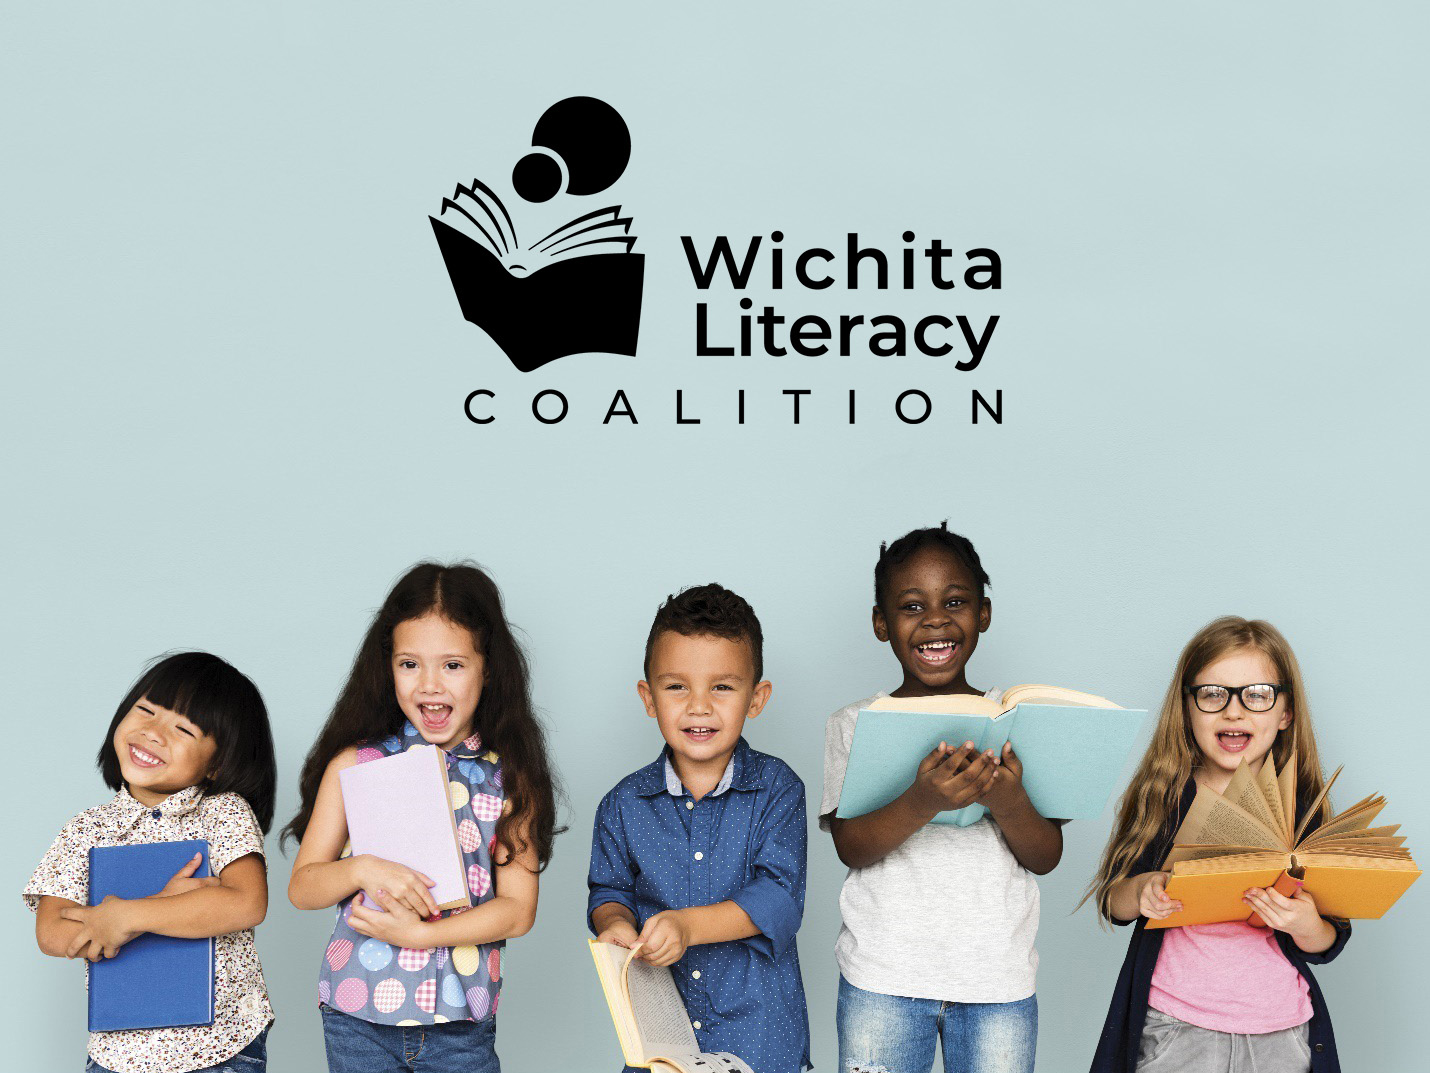 Meet the Wichita Literacy Coalition